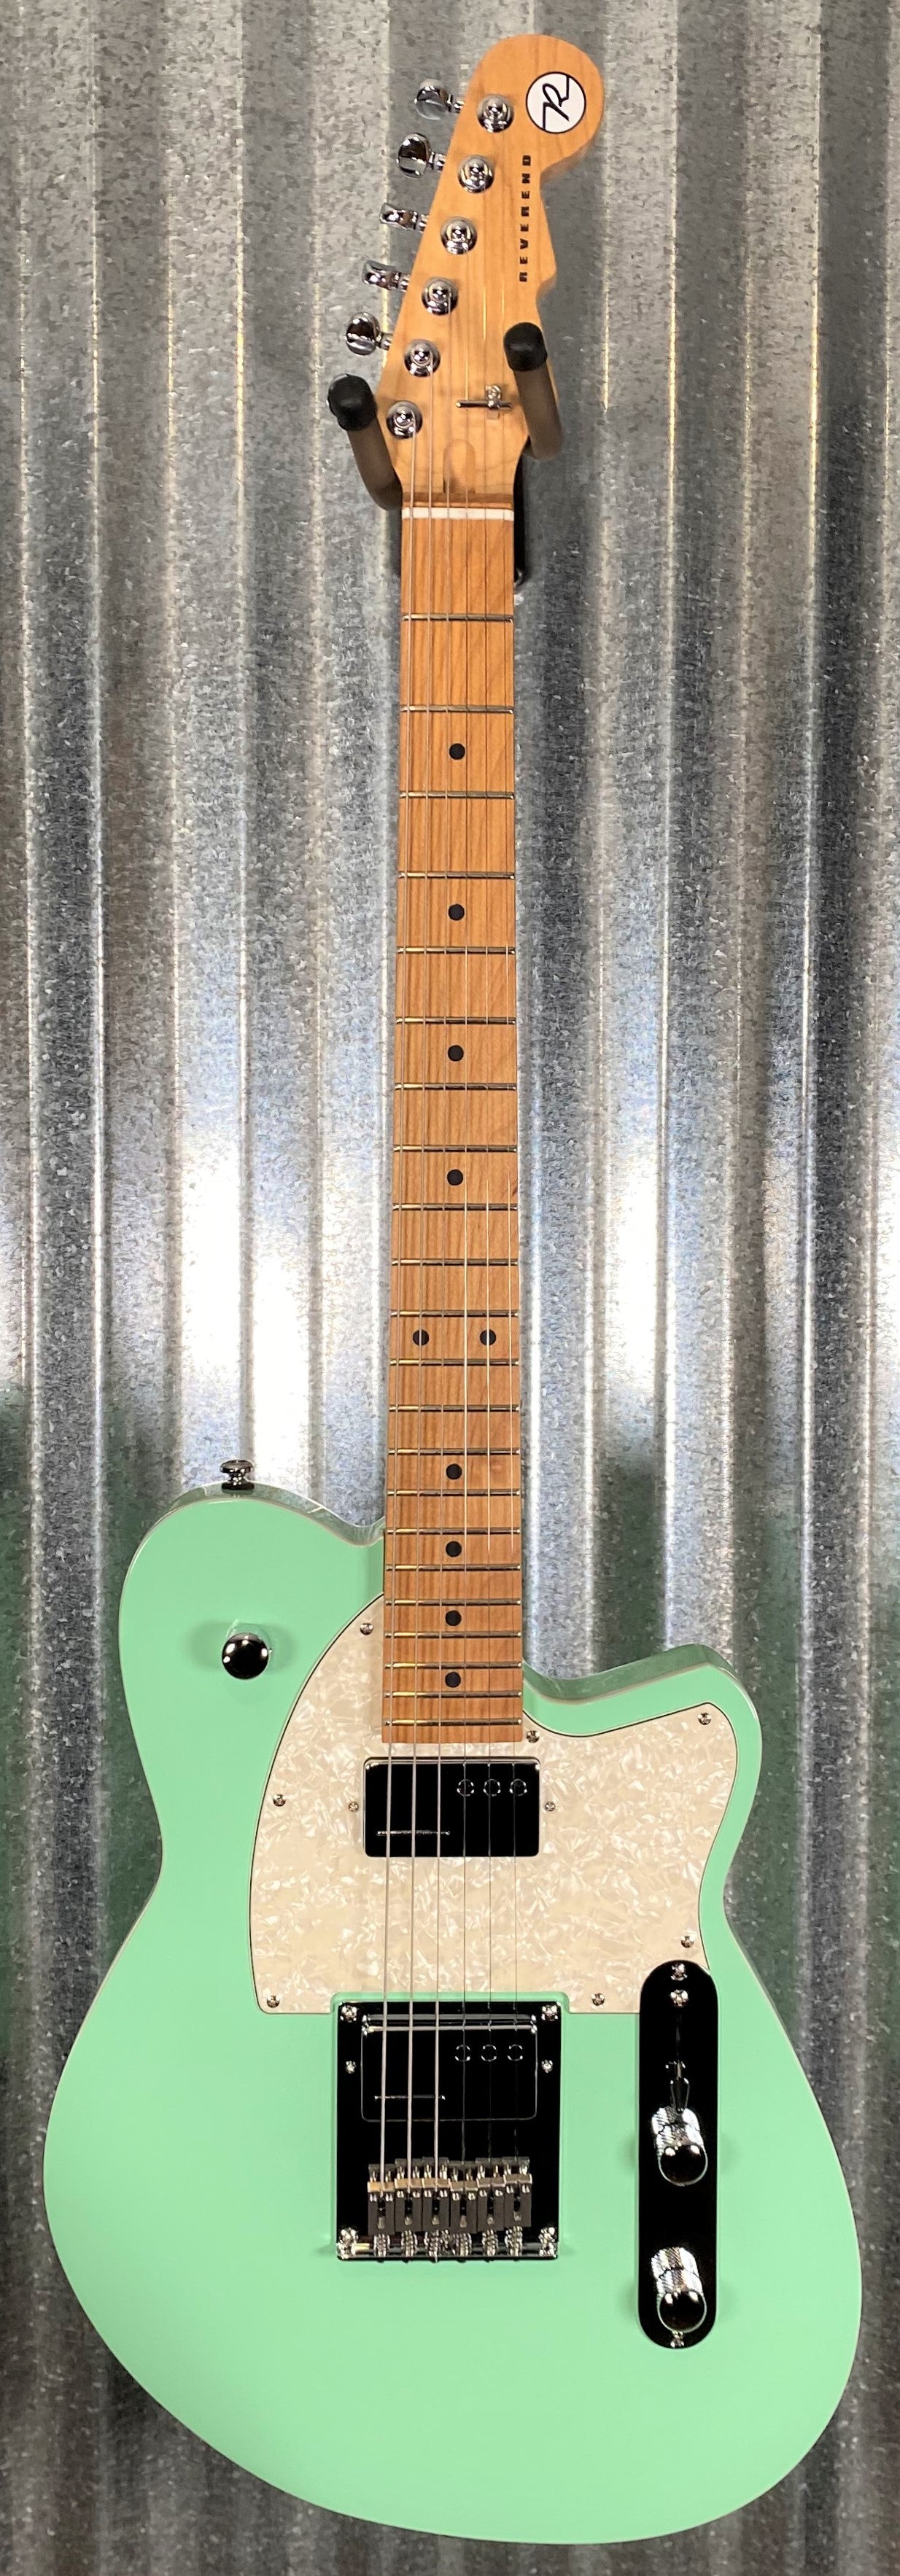 Reverend Guitars Crosscut Oceanside Green Guitar #9839